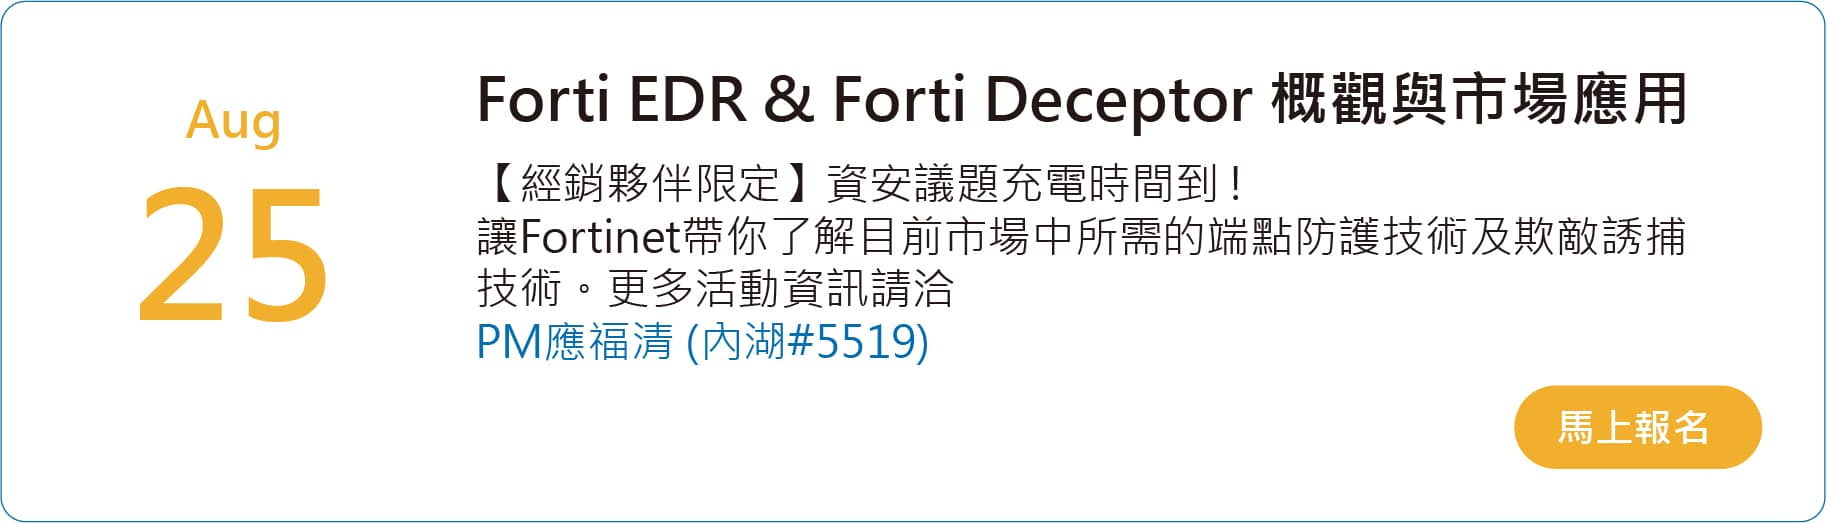 FortiEDR & FortiDeceptor 概觀與市場應用